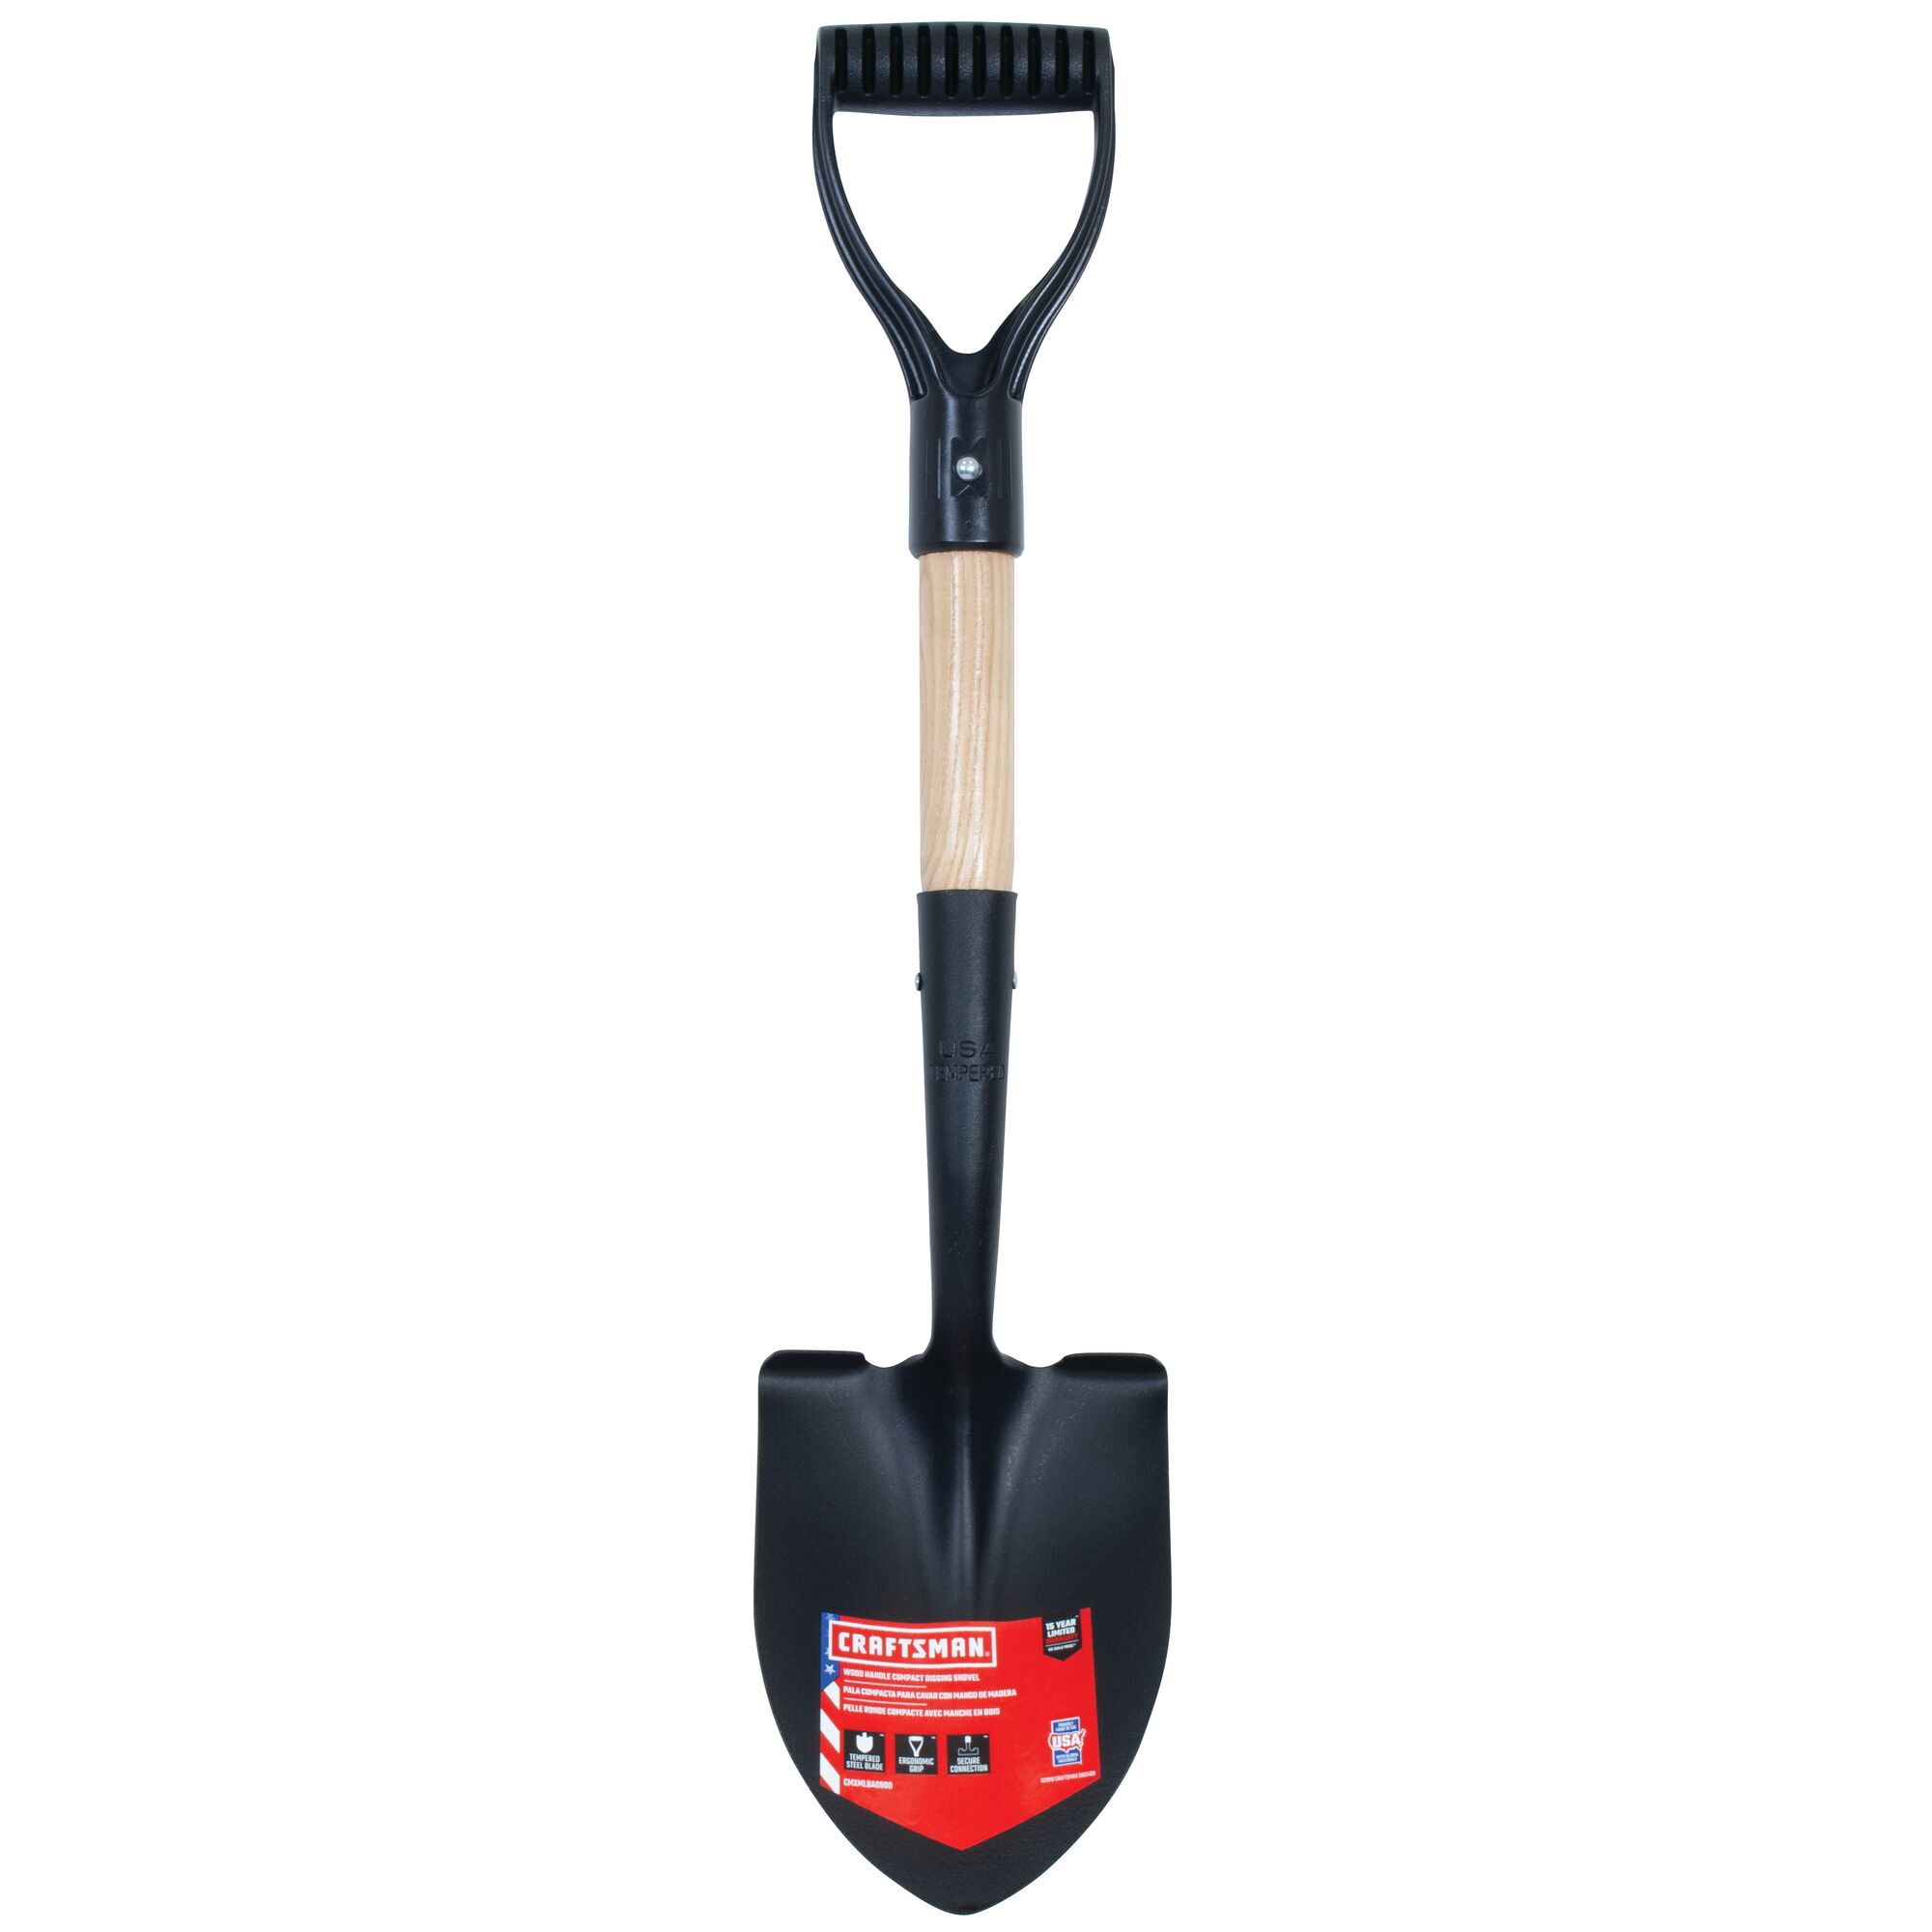 Profile of wood handle compact digging shovel.